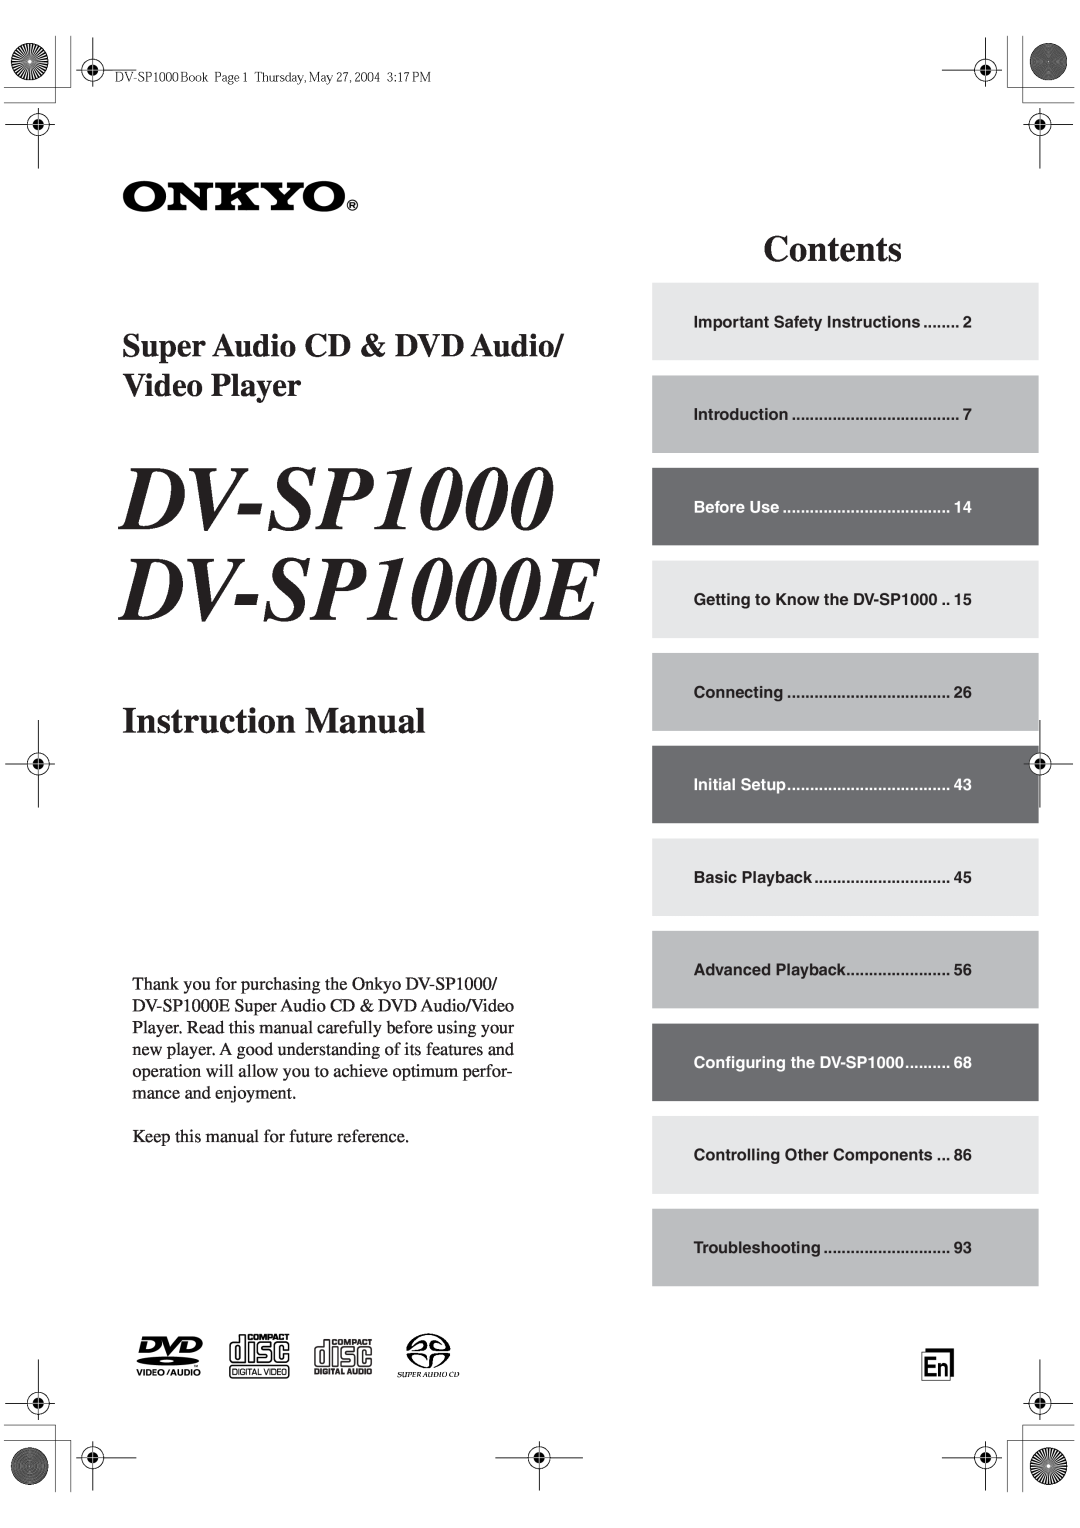 Onkyo instruction manual DV-SP1000 DV-SP1000E, Instruction Manual, Contents, Super Audio CD & DVD Audio/ Video Player 